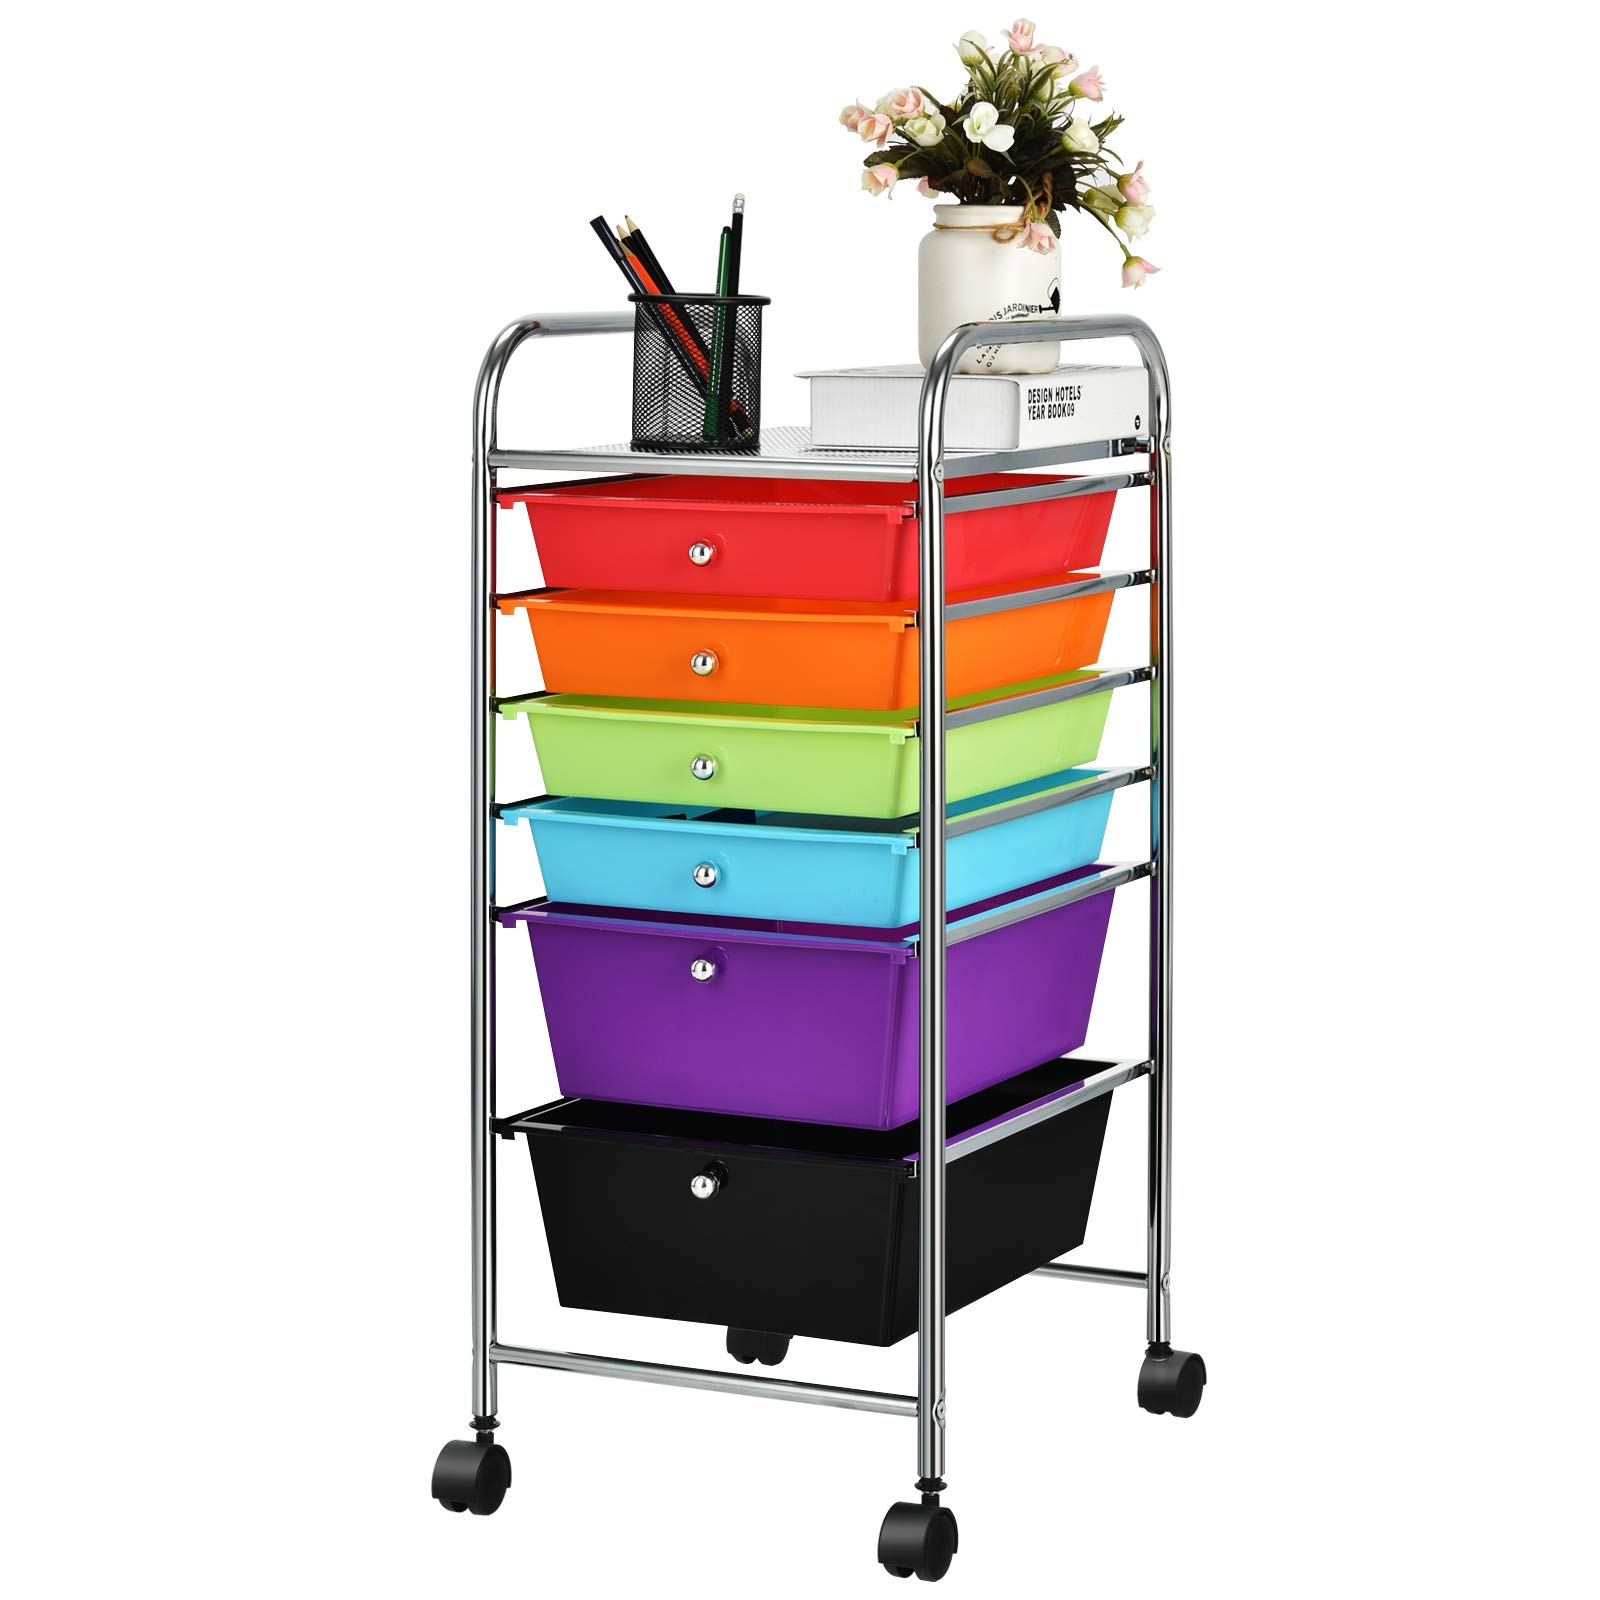 Giantex 6 Storage Drawer Cart Rolling Organizer Cart for Tools Scrapbook Paper Home Office School Multipurpose Mobile Utility Cart